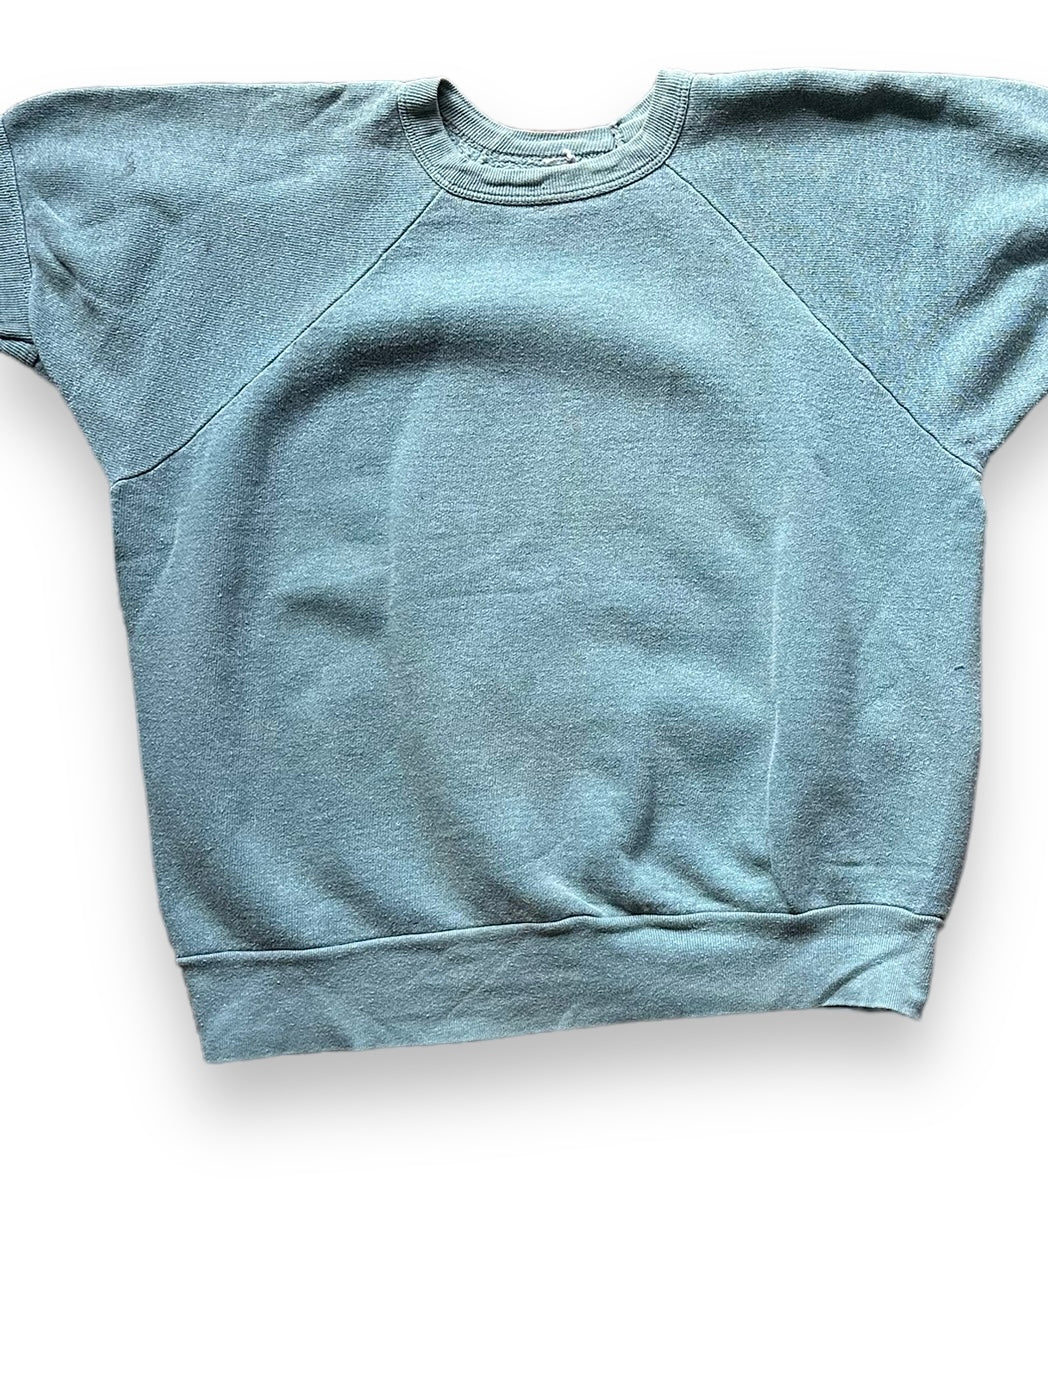 Front Detail on Vintage Pale Green Short Sleeve Crewneck Sweatshirt SZ M | Barn Owl Vintage Clothing | Seattle Vintage Sweatshirts